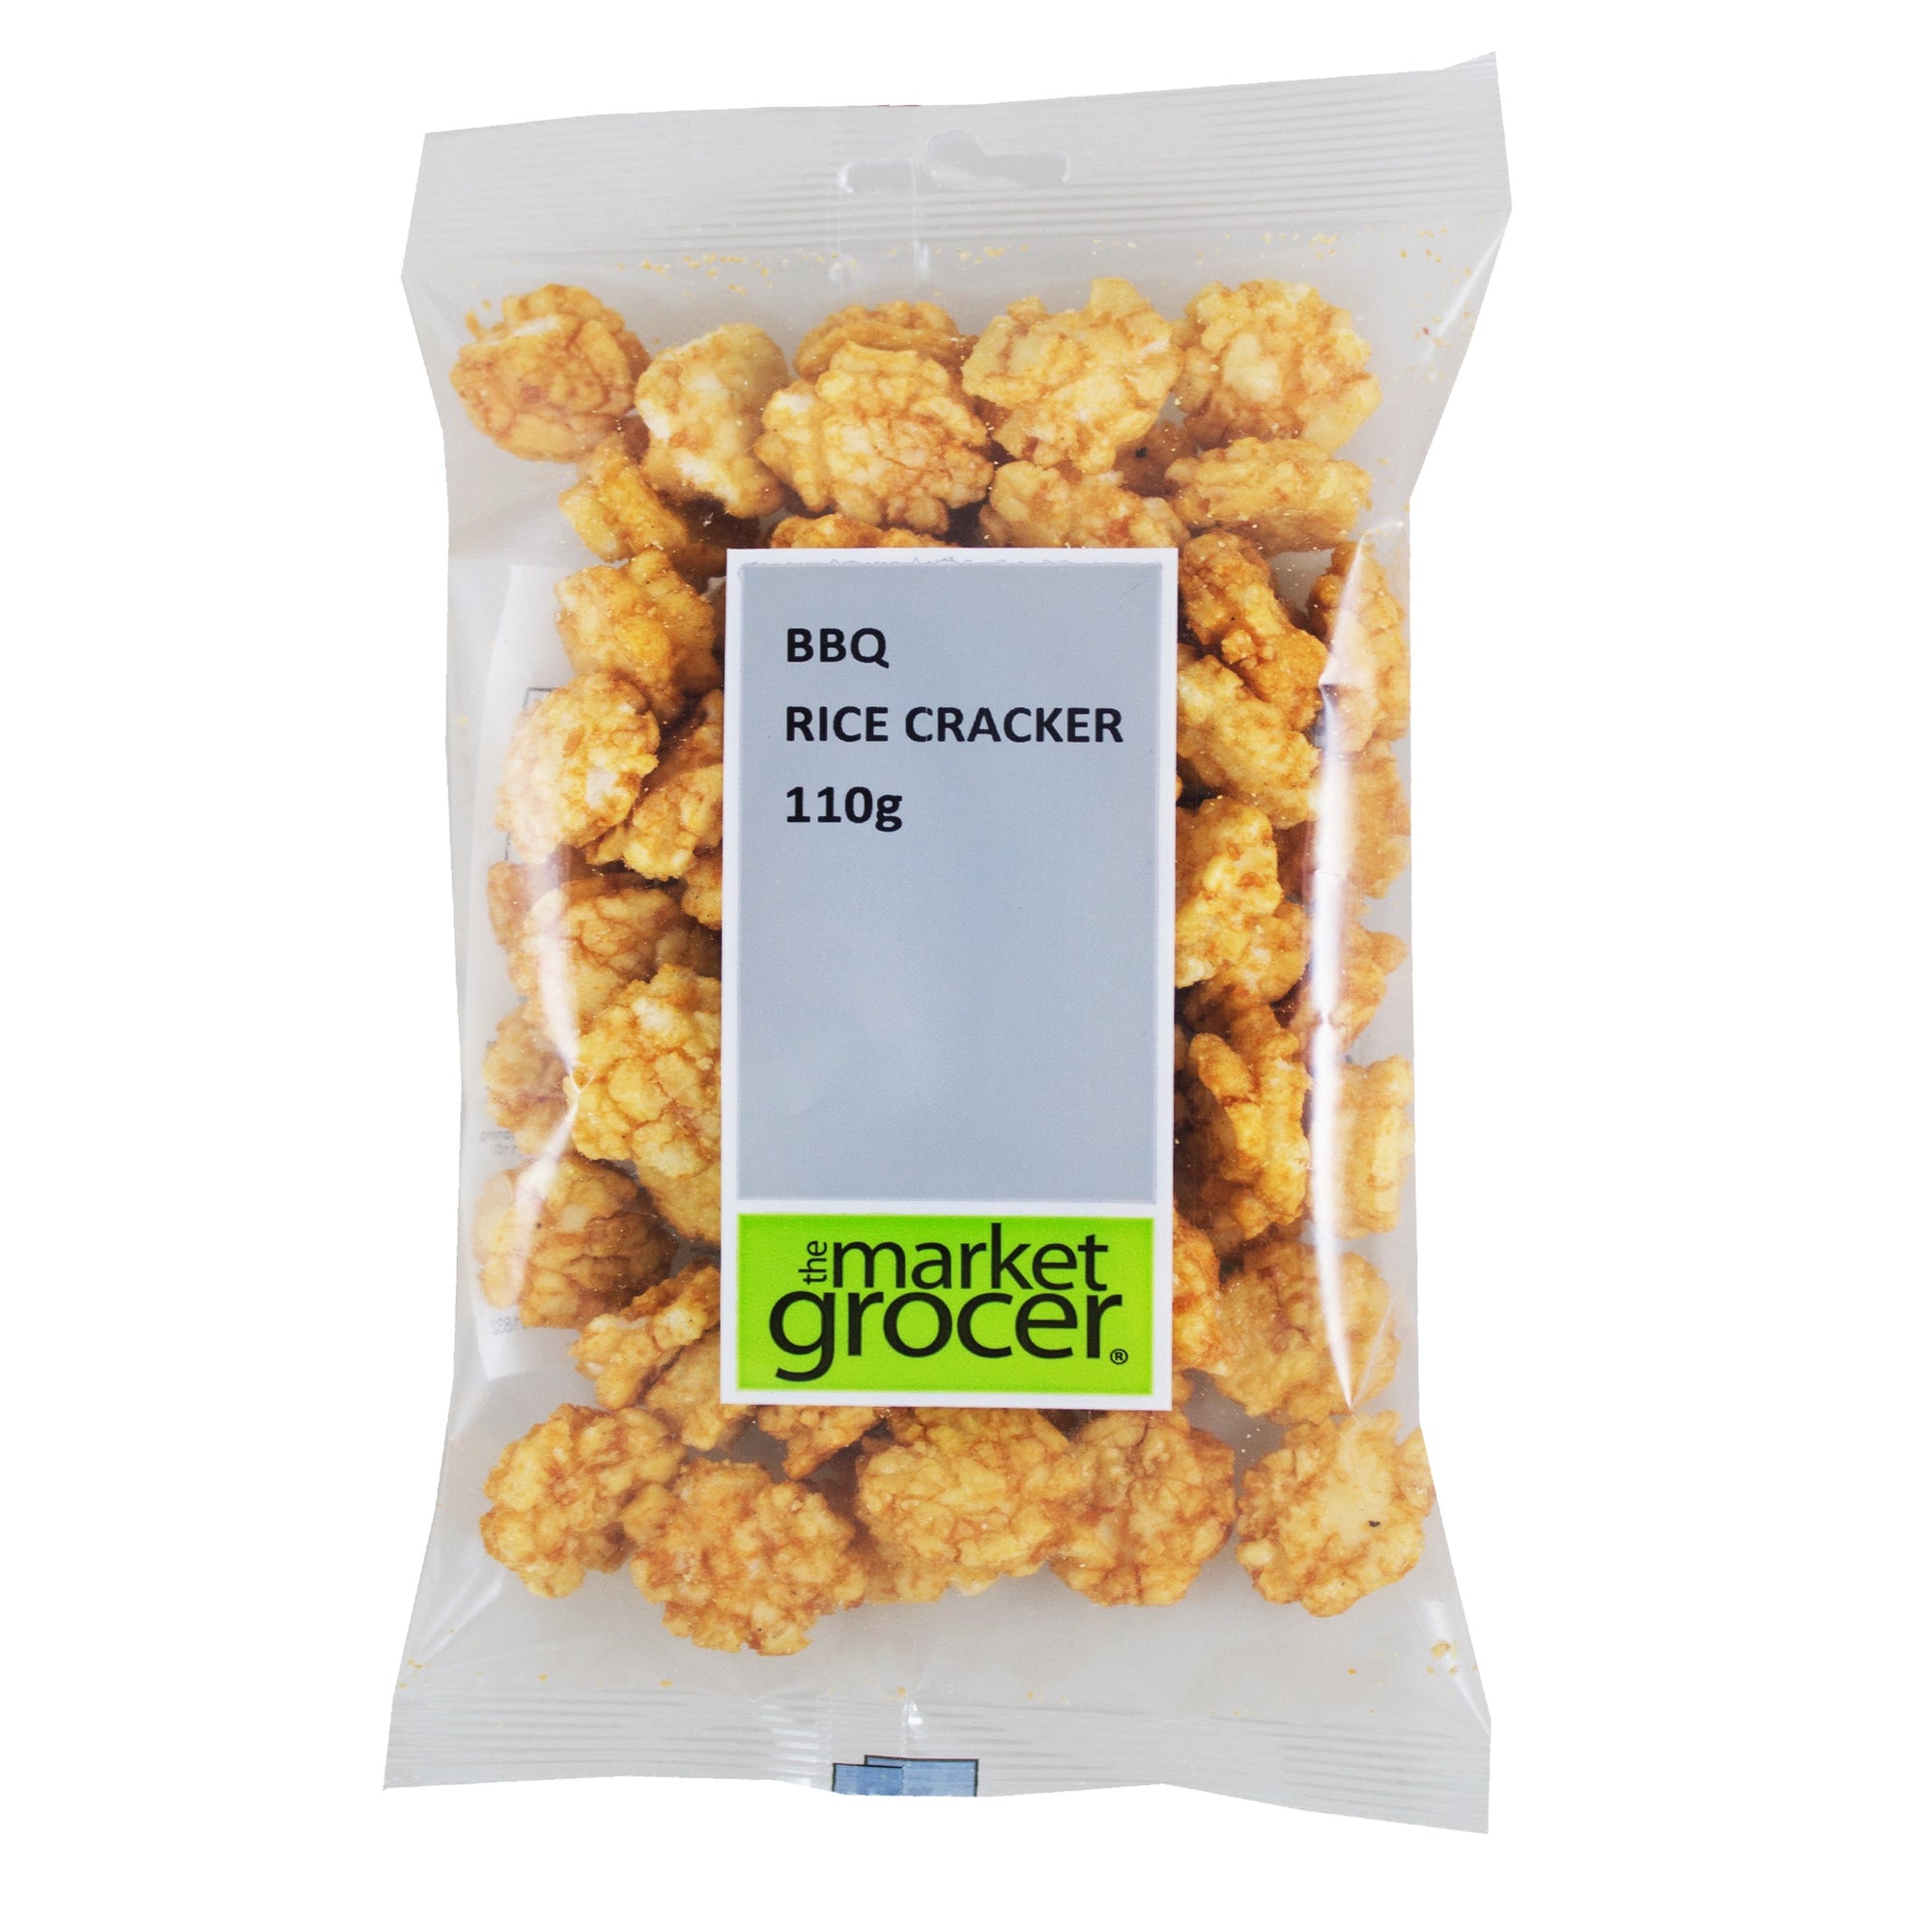 The Market Grocer Rice Cracker BBQ 110g